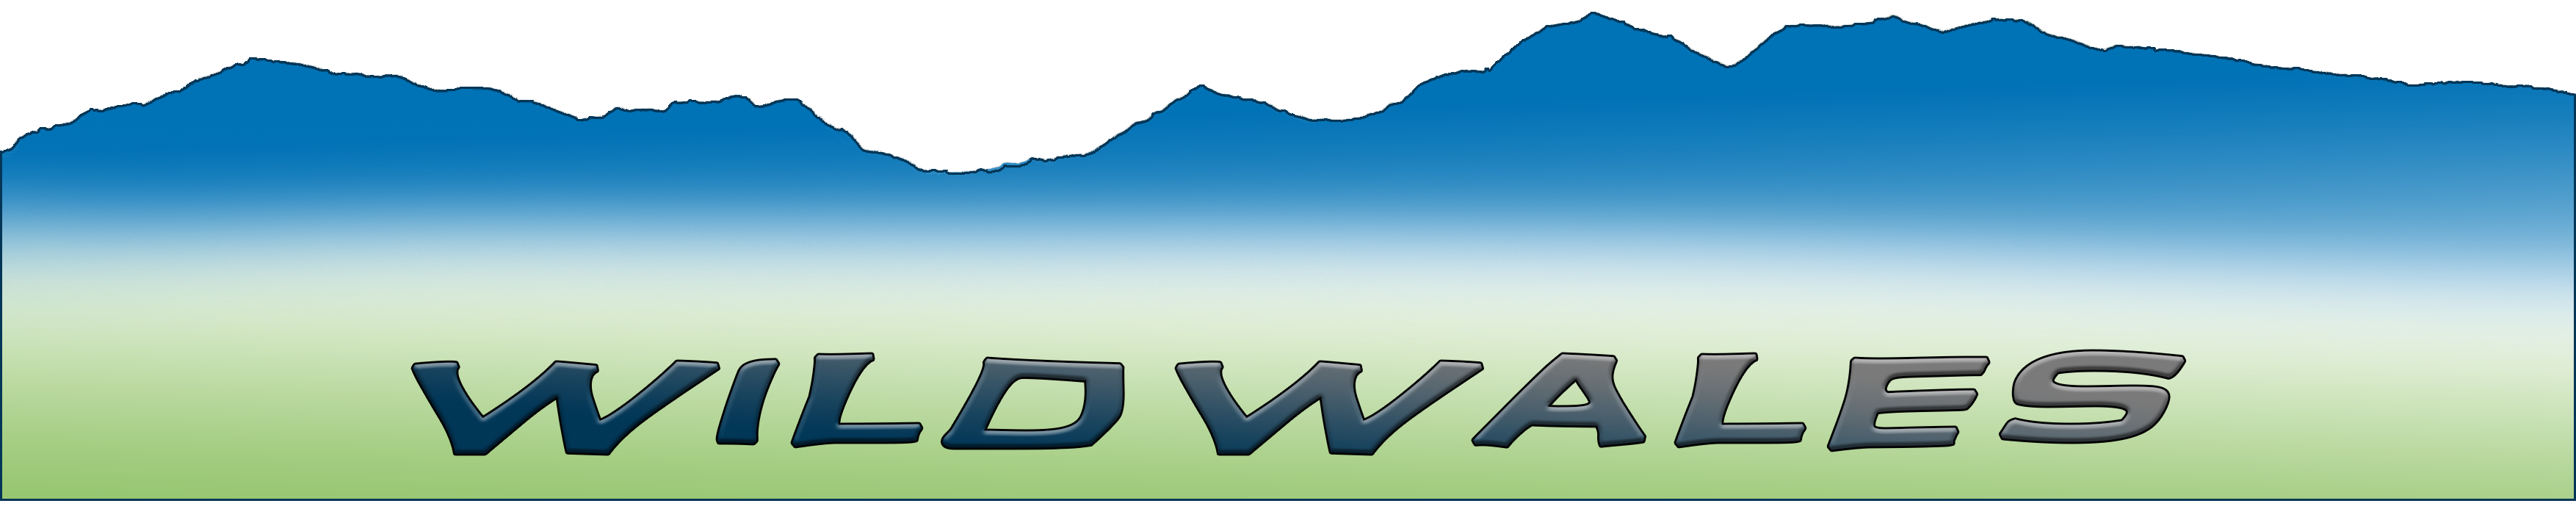 wildwales logo v3